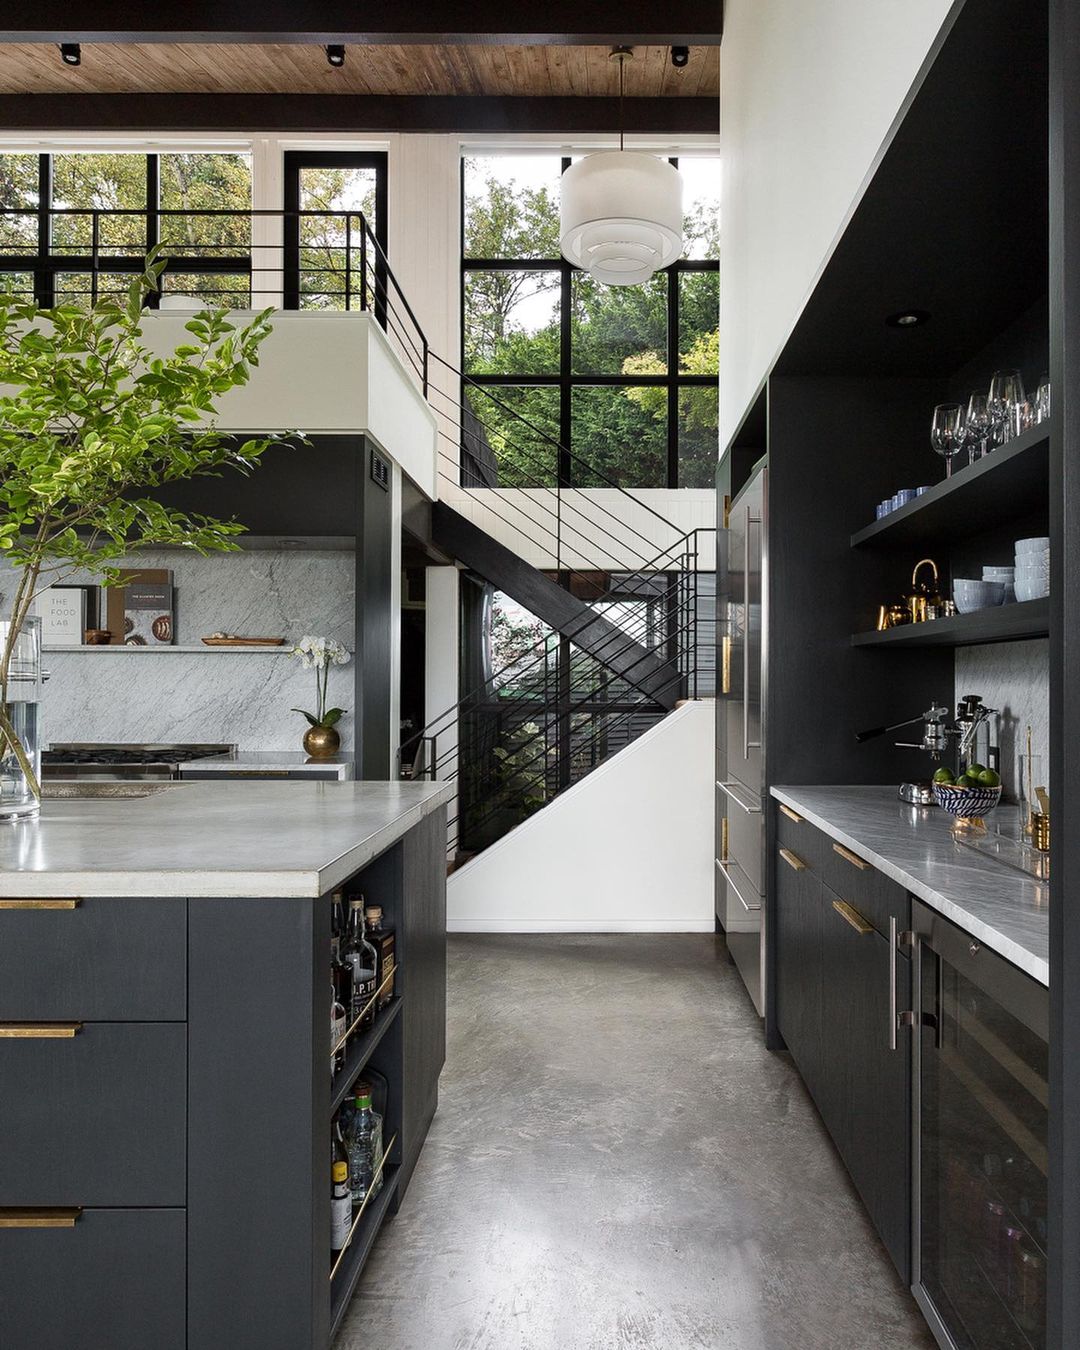 Modern Kitchen with Lots of Dark Accents and Metallic. Photo by Instagram user @kaylen.flugel.design